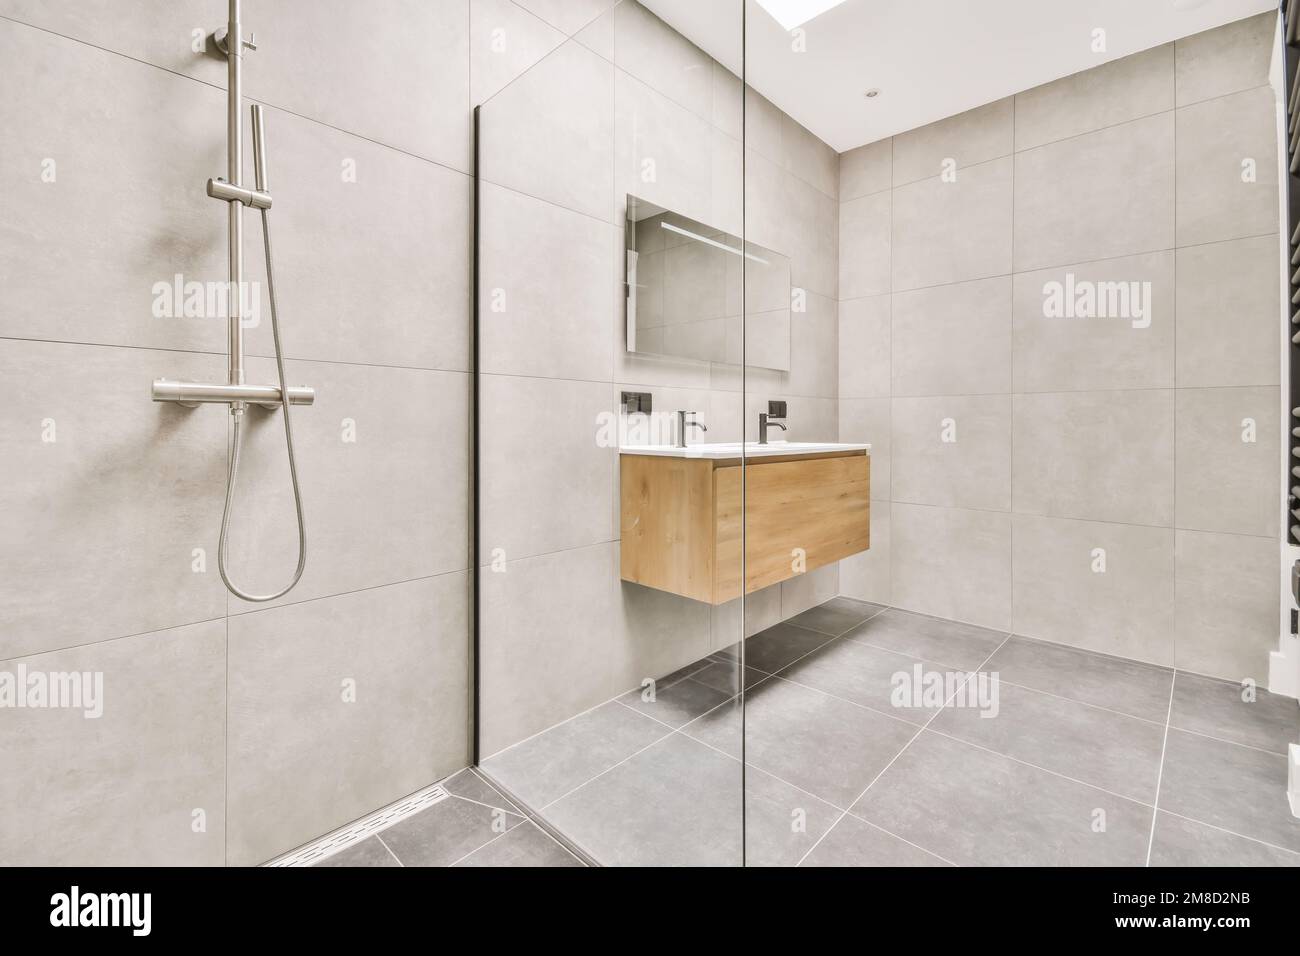 Corner Shower with Mosaic Marble Floor - Transitional - Bathroom